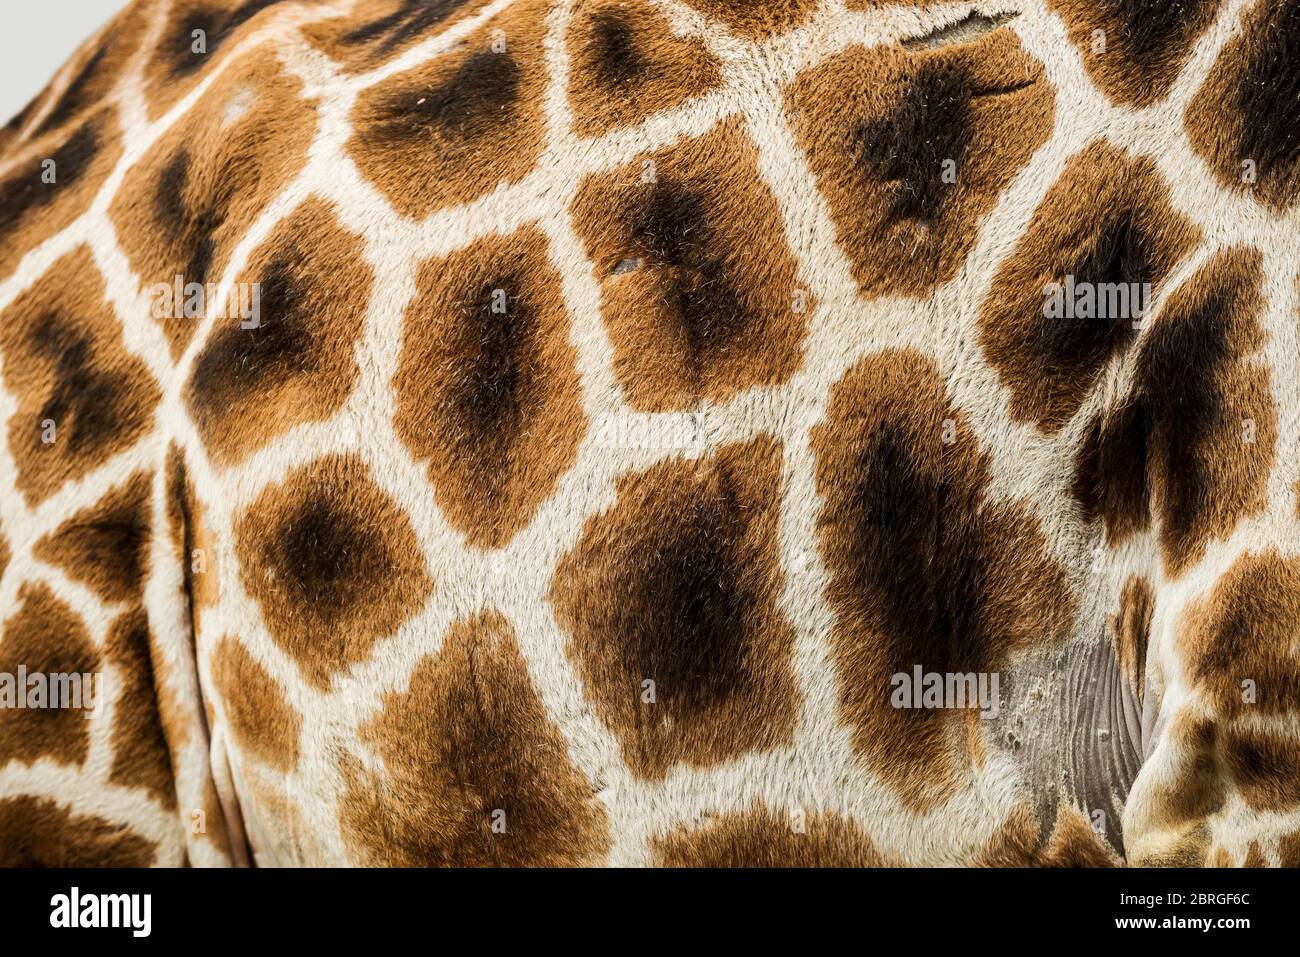 giraffe close-up detail of skin pattern Stock Photo